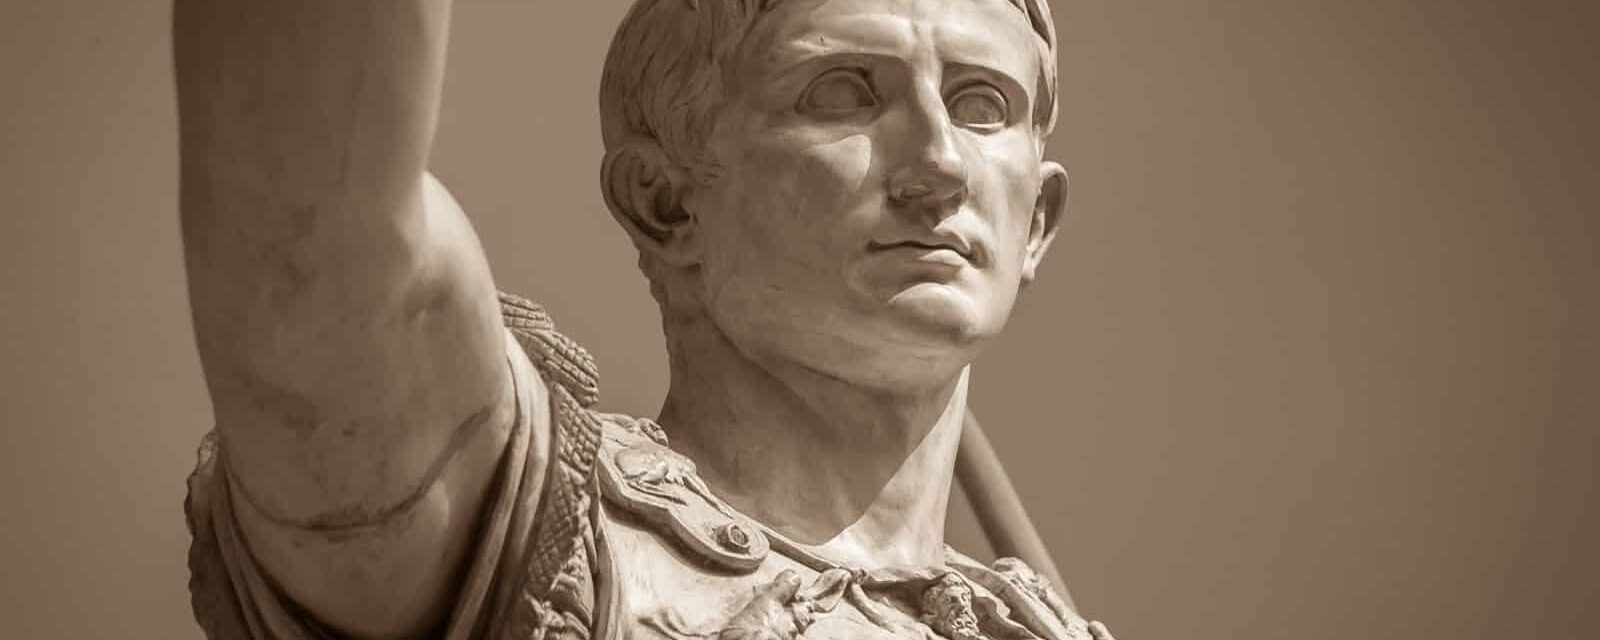 Série “Grandes Imperadores Romanos”: Otávio Augusto